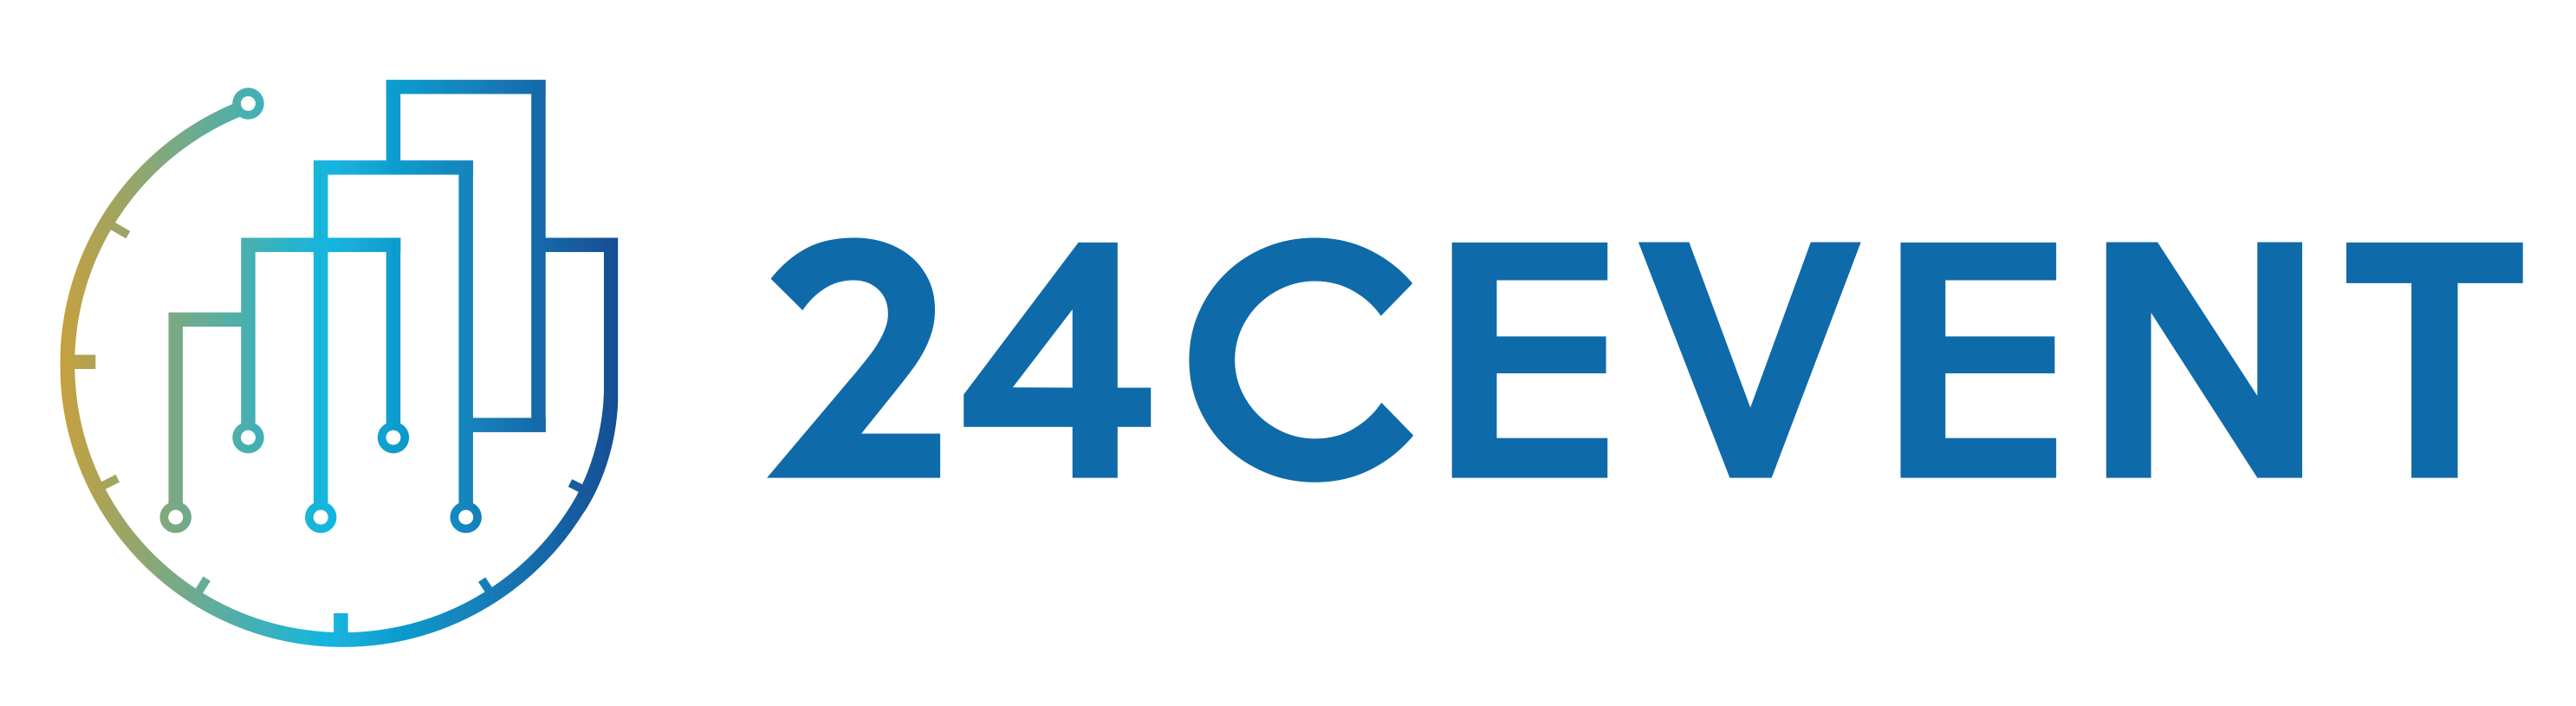 24cevent logo